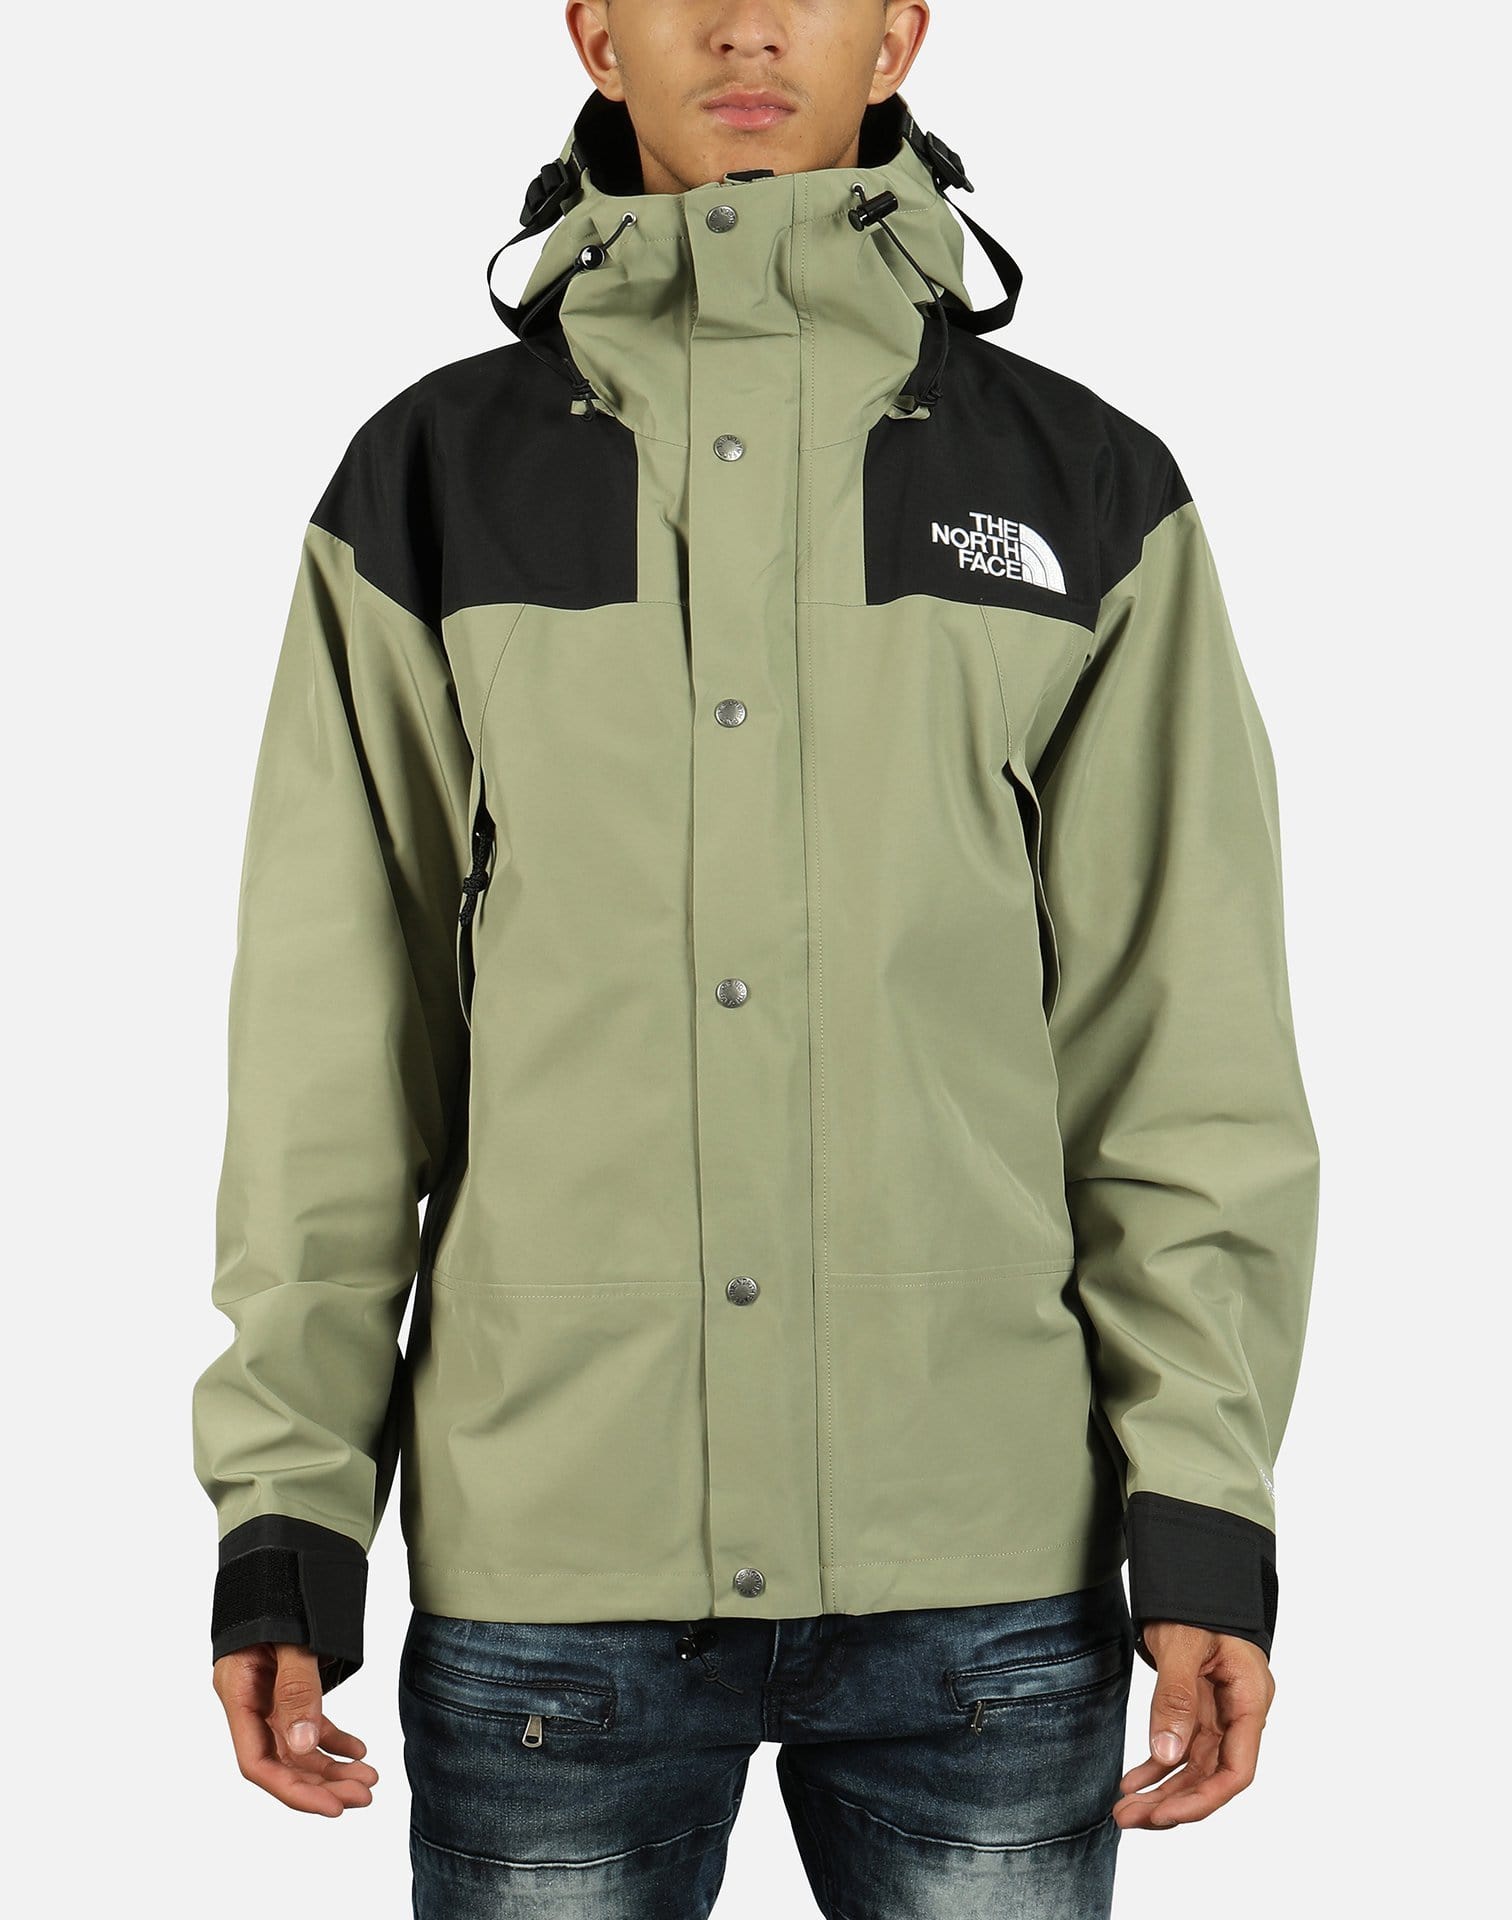 north face 1990 mountain jacket gtxUS規格の海外限定モデルです